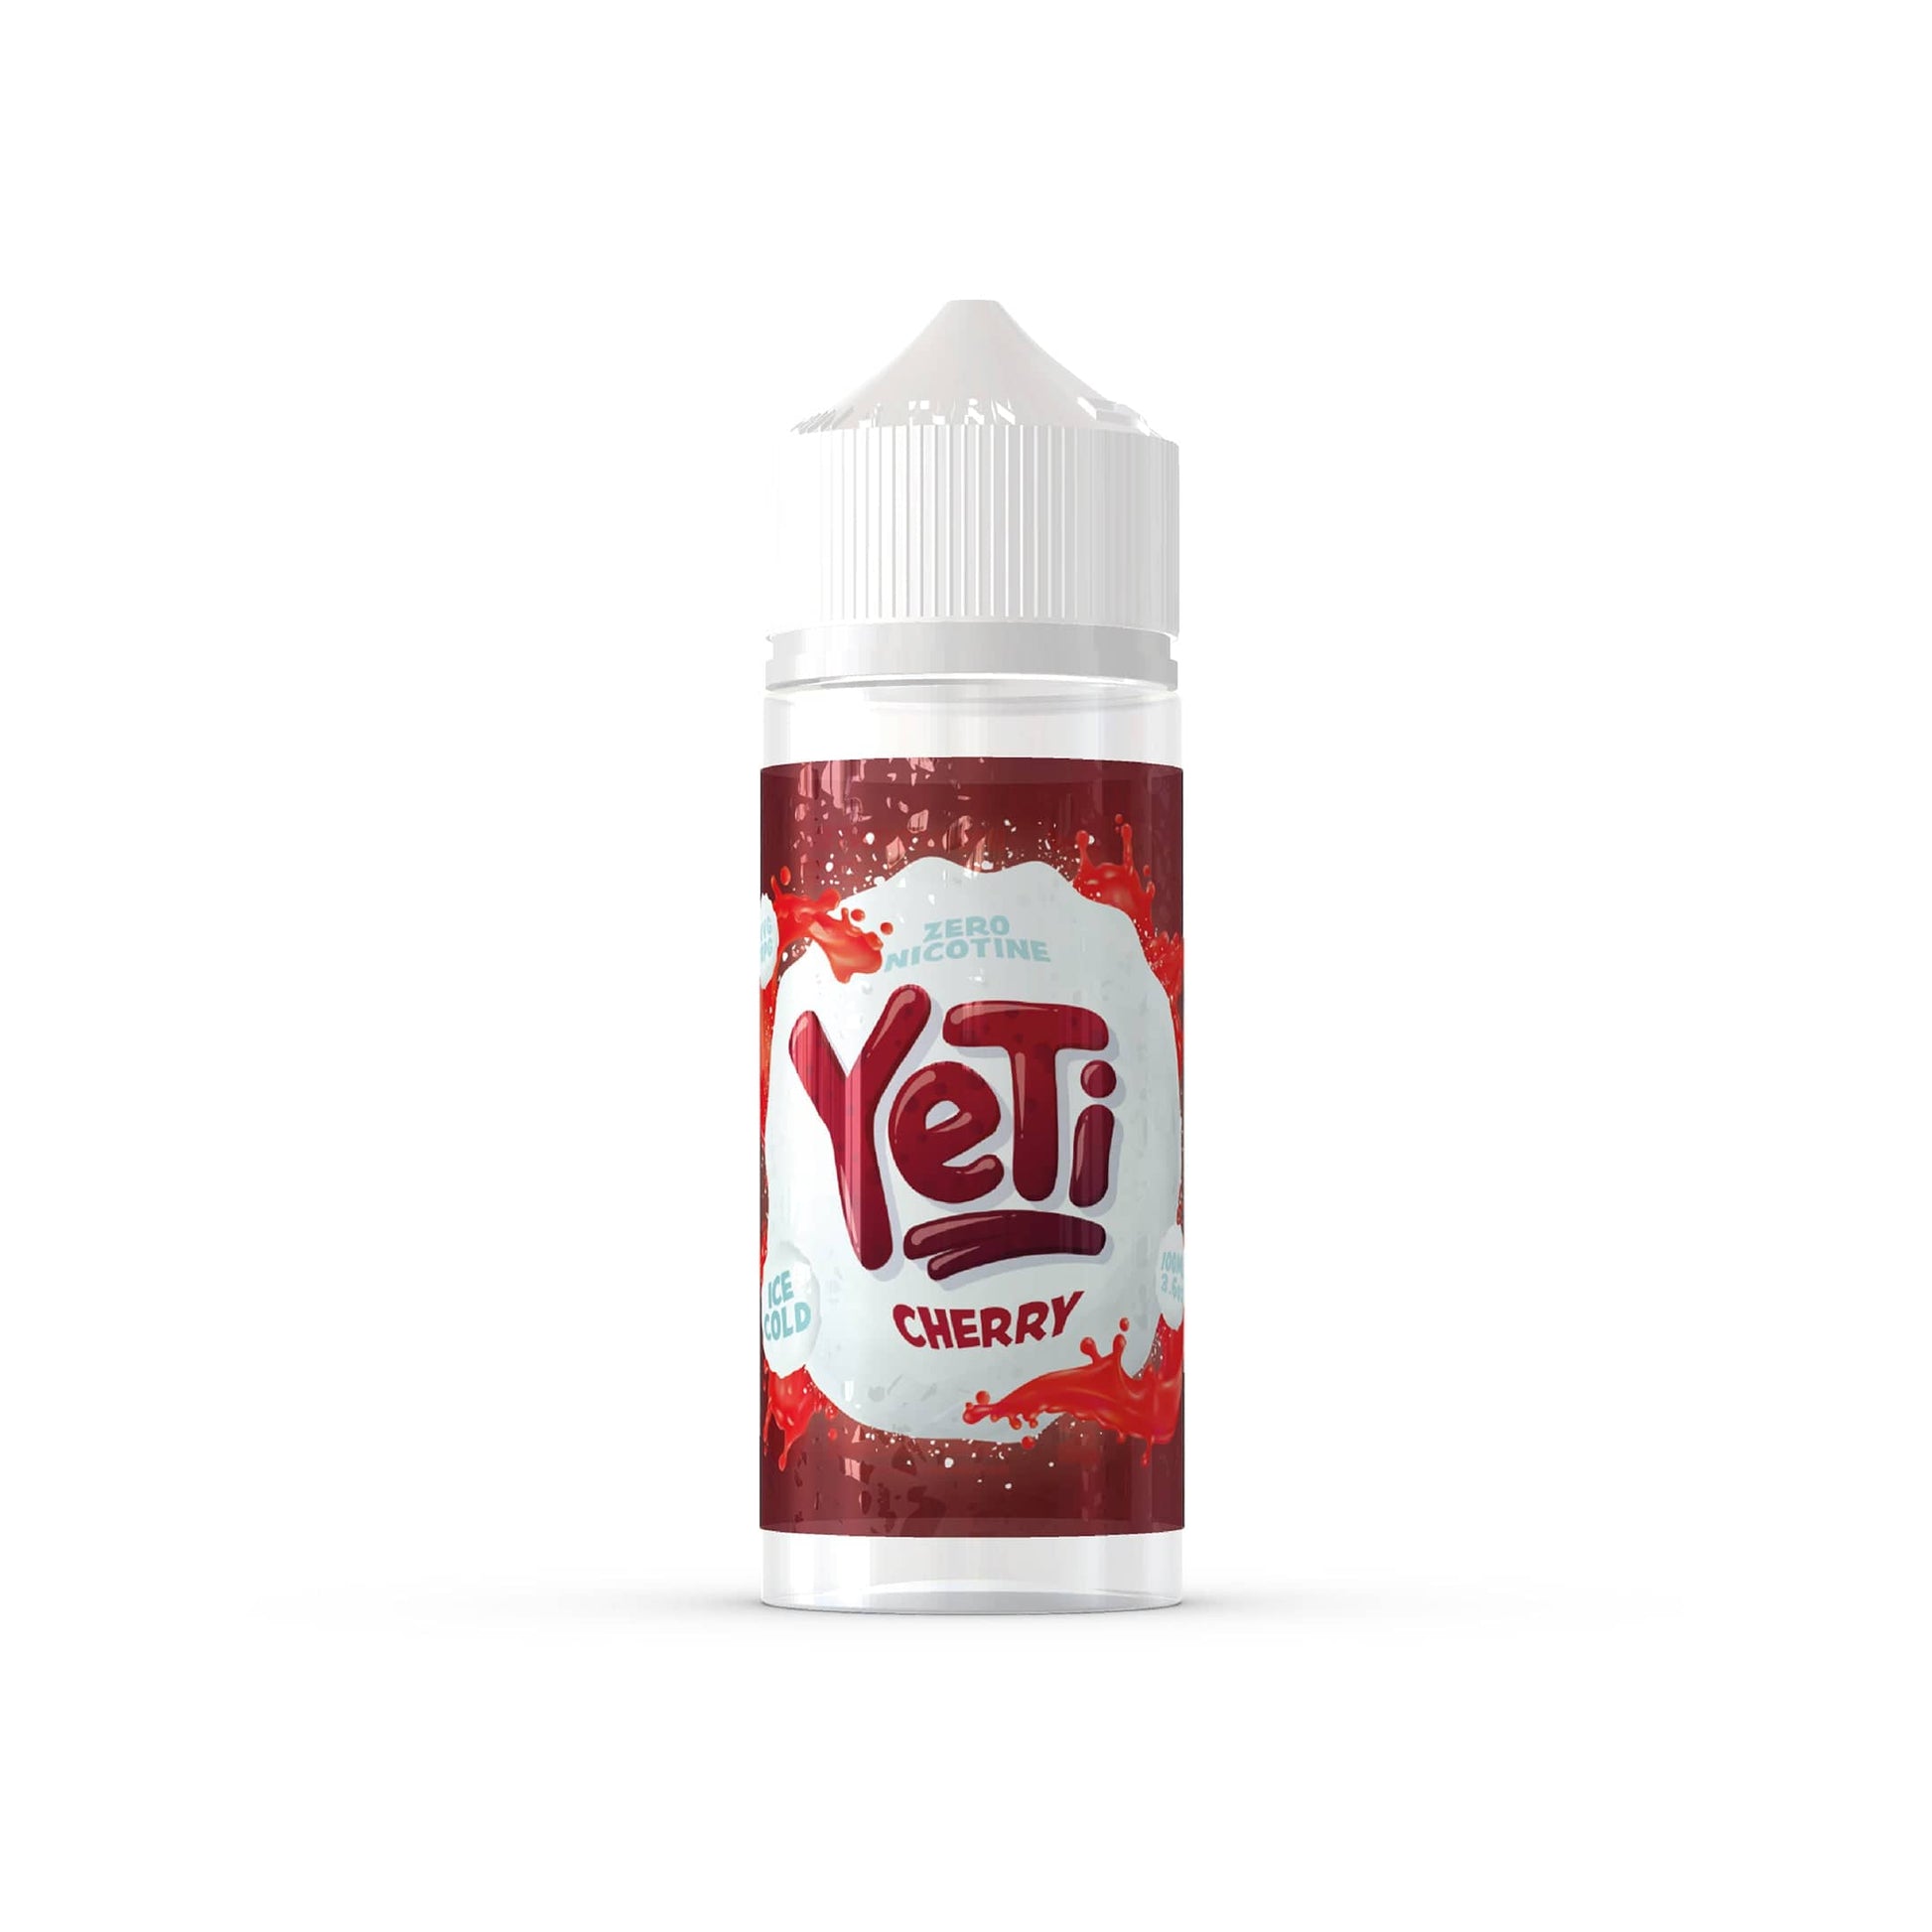 YETI E-Liquid Shortfill Eliquids Cherry Yeti Ice Cold 100ml Shortfill E-Liquid